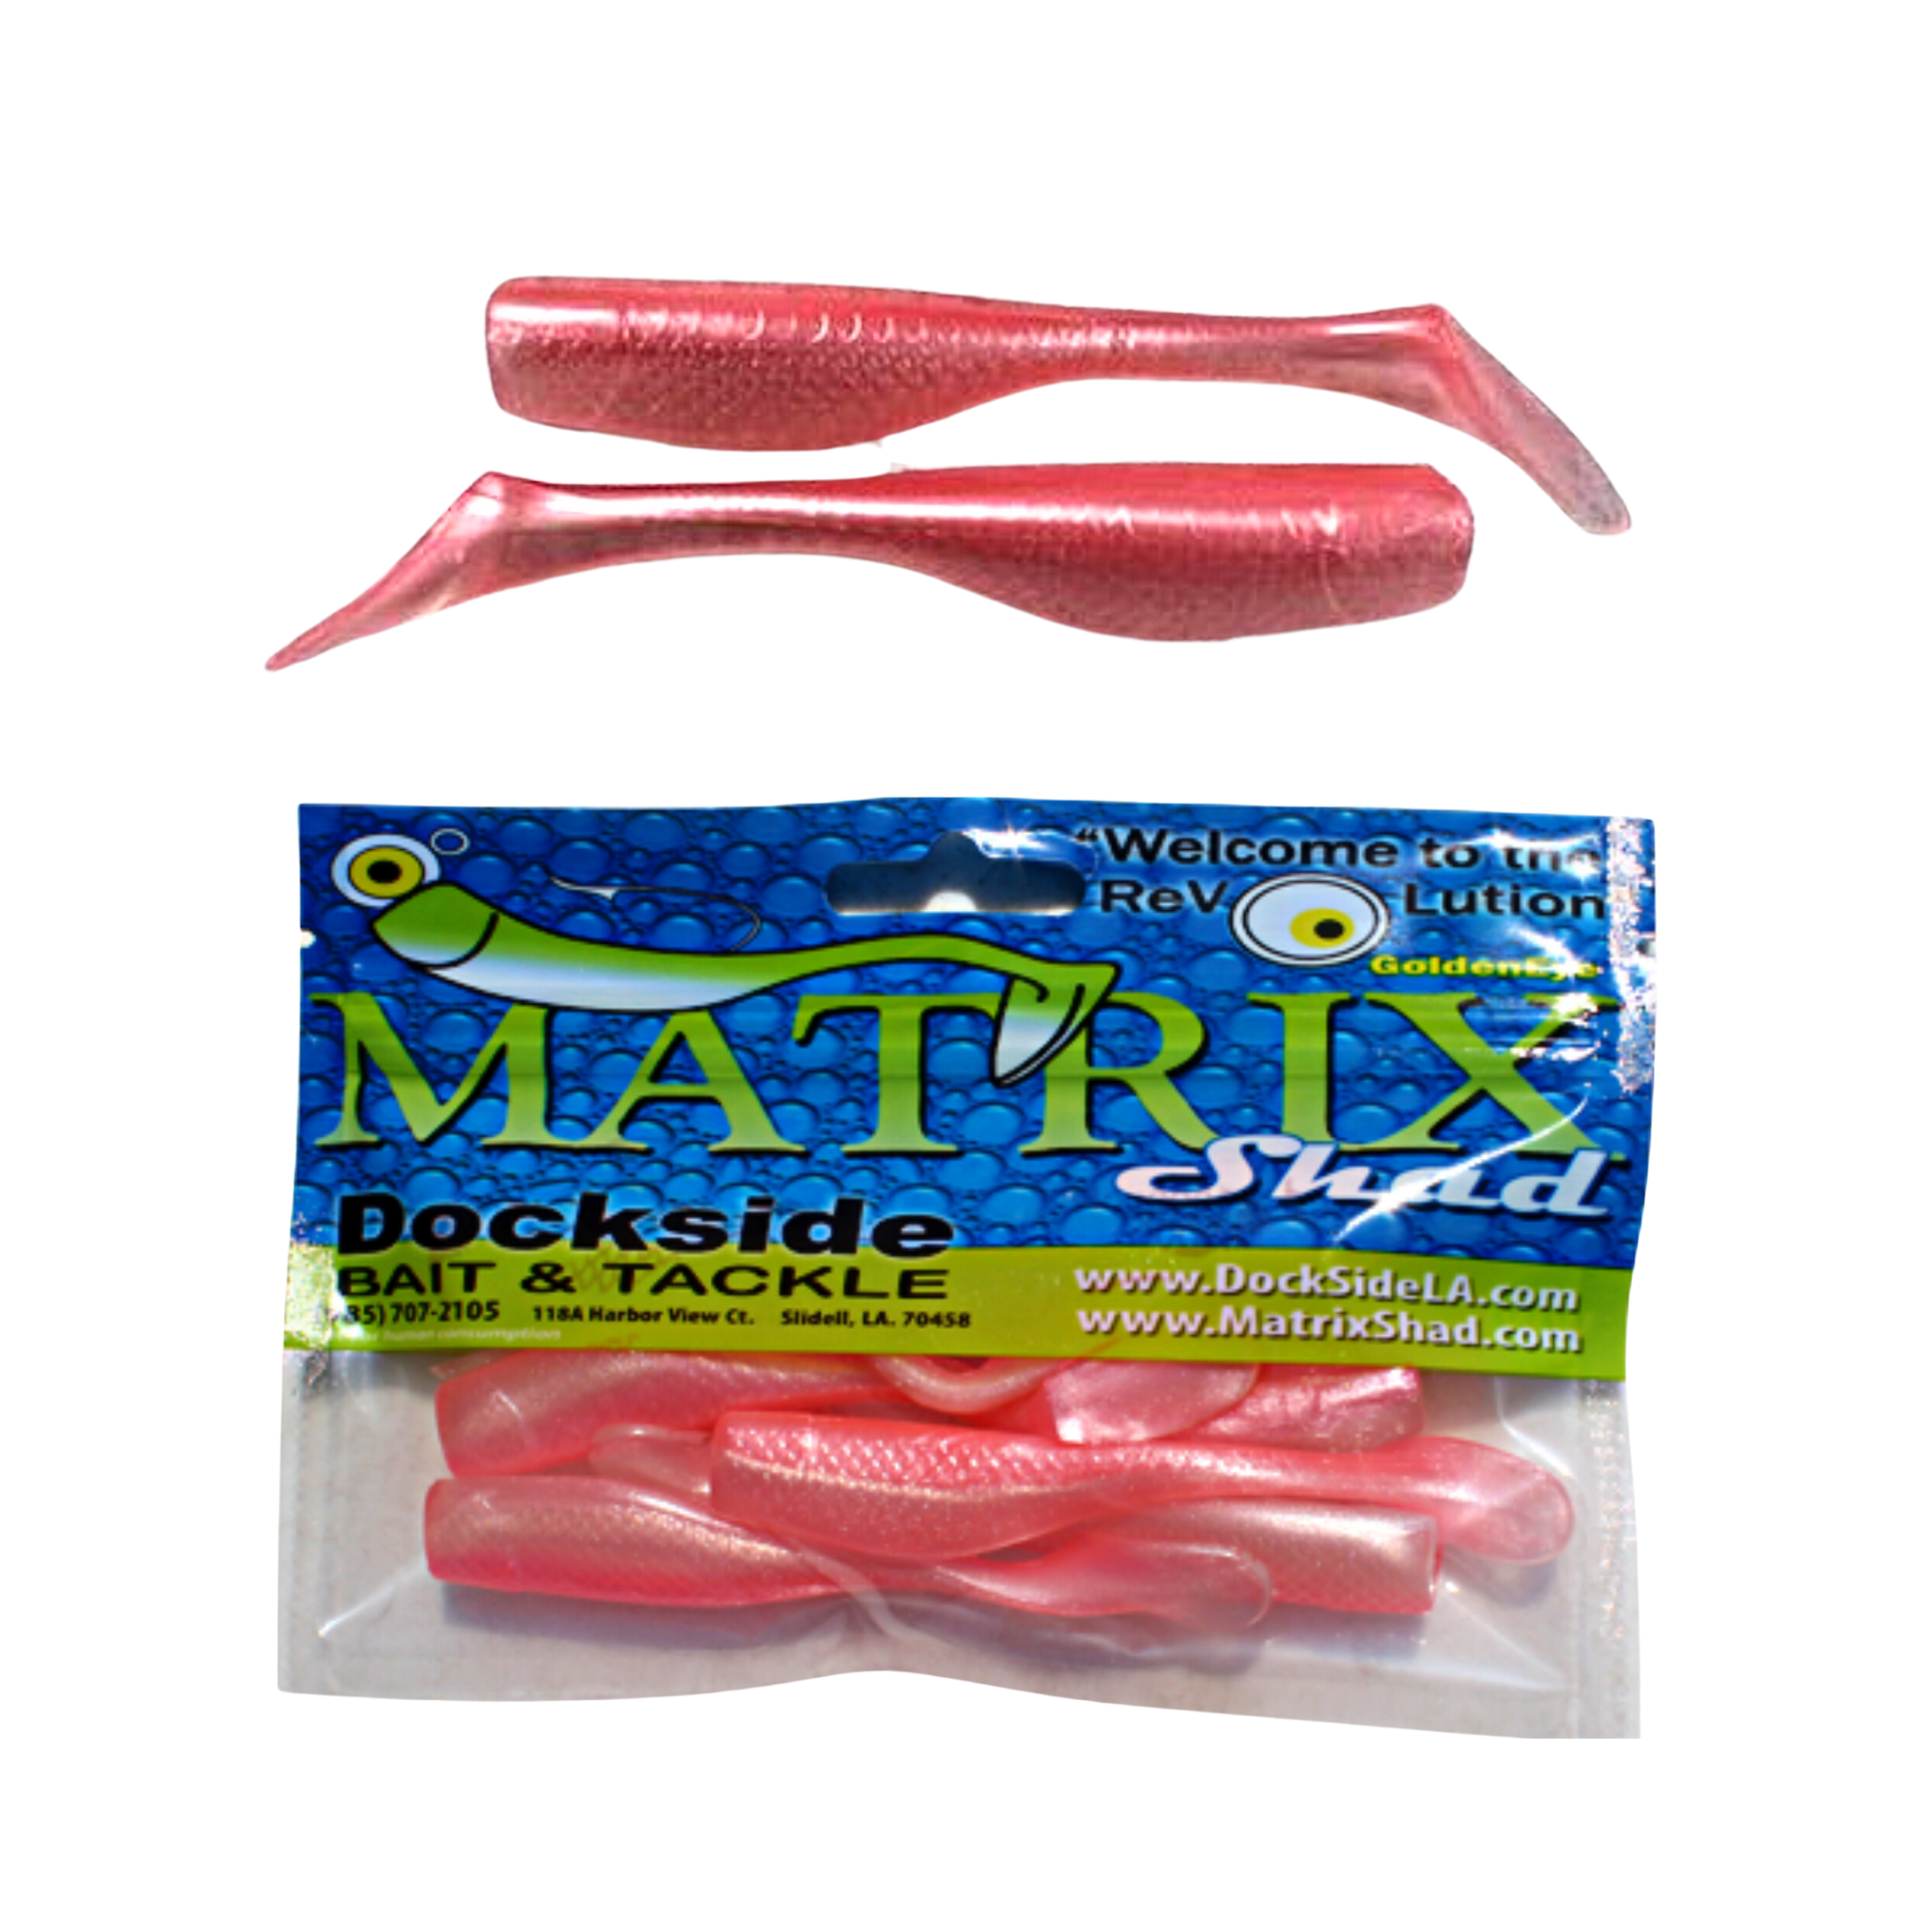 Matrix Shad Lures, Baits, Tackle, Soft Plastic Lure, Fishing Store